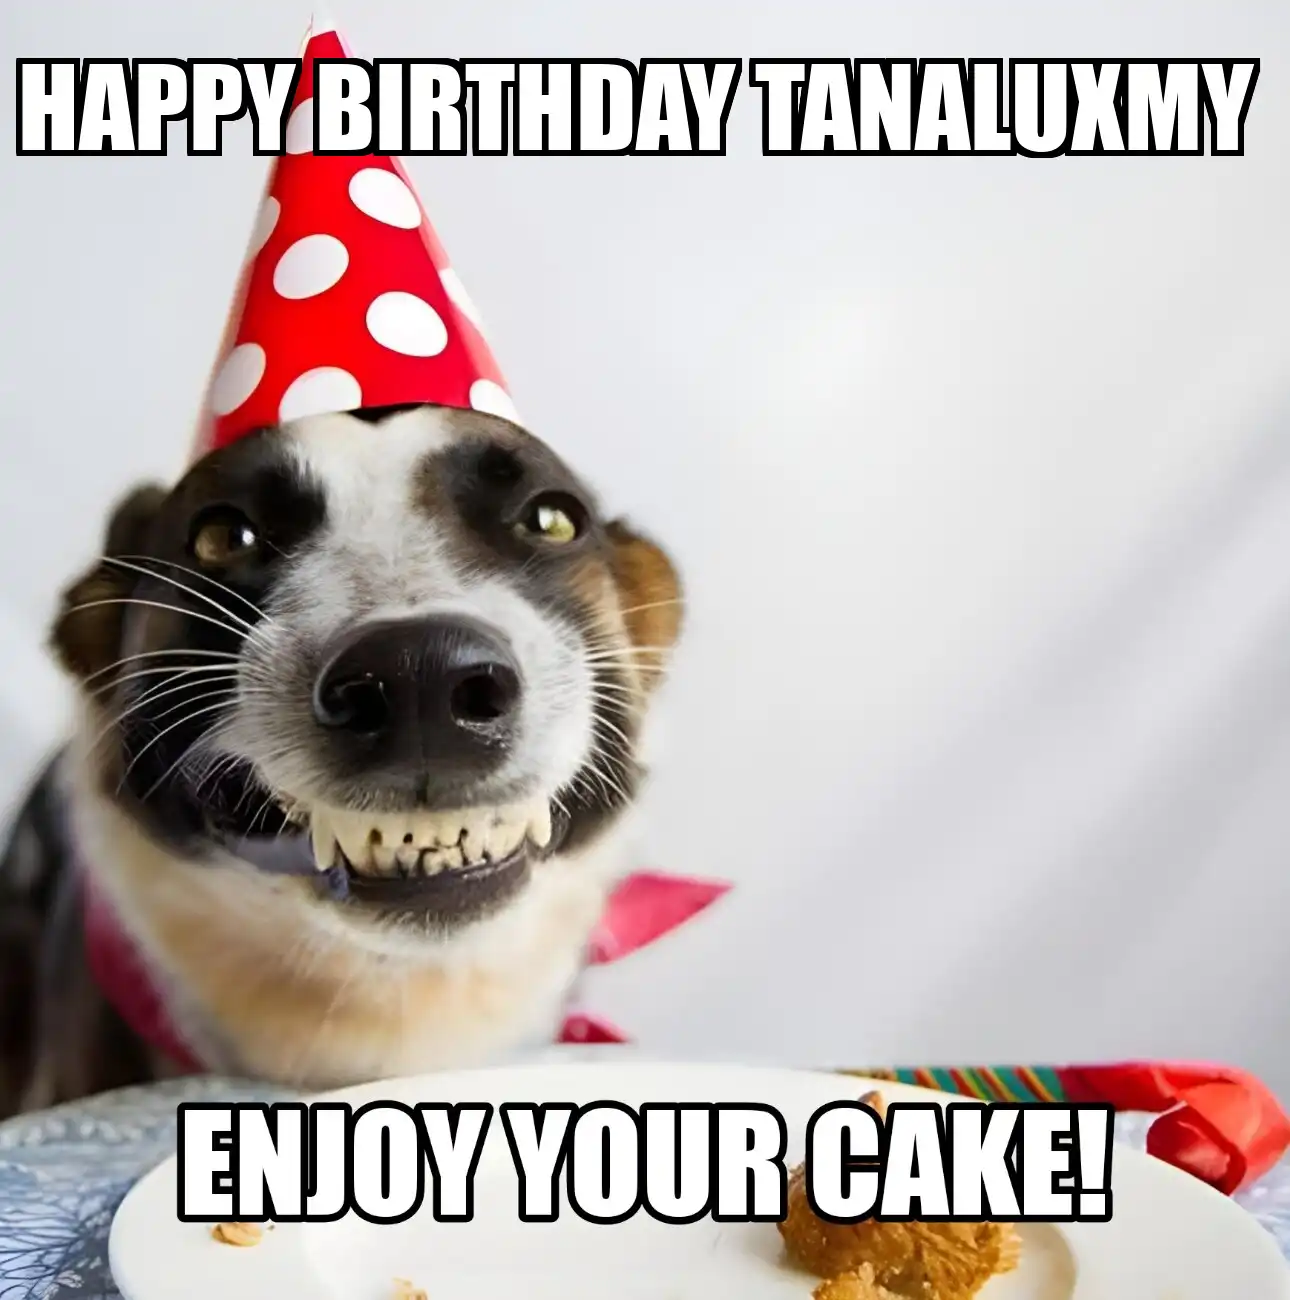 Happy Birthday Tanaluxmy Enjoy Your Cake Dog Meme